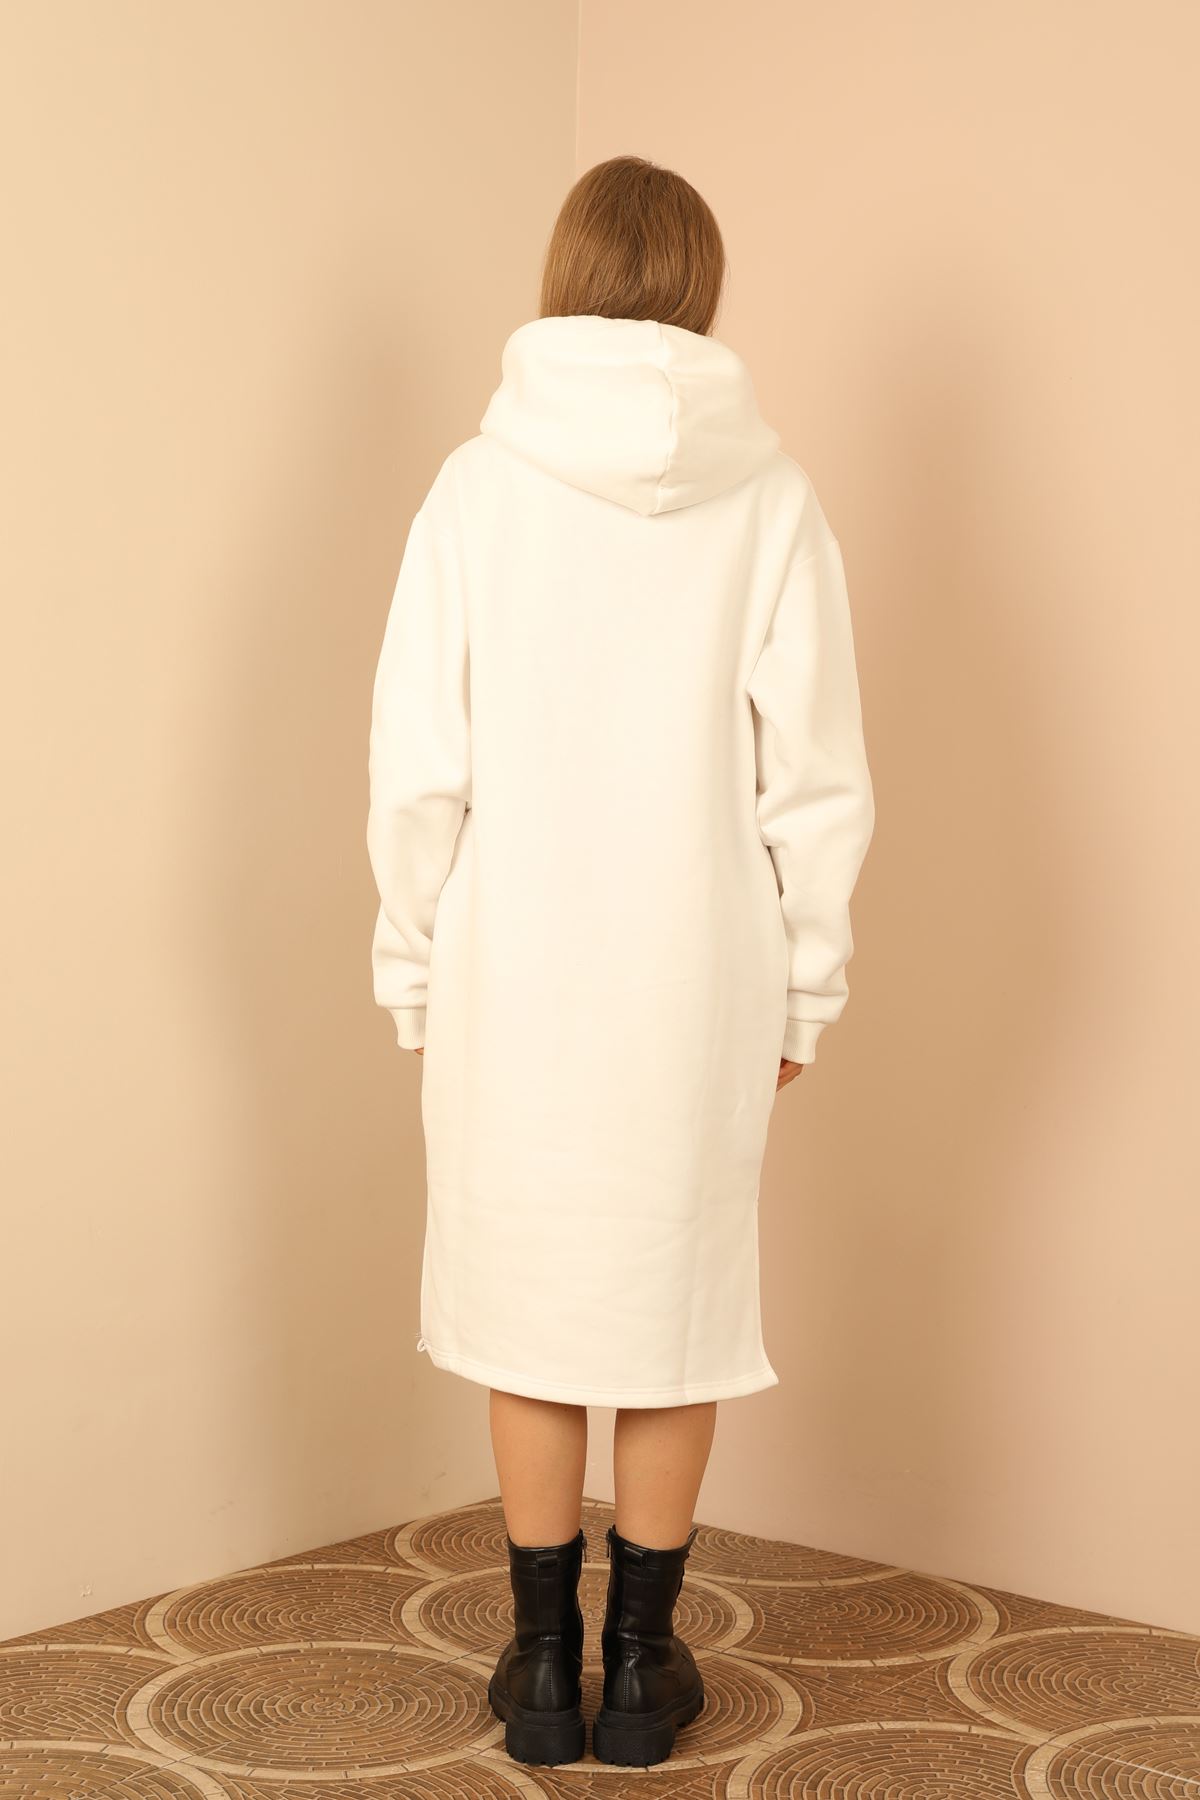 Third Knit With Wool İnside Fabric Long Sleeve Hooded Oversize Women Dress - Ecru